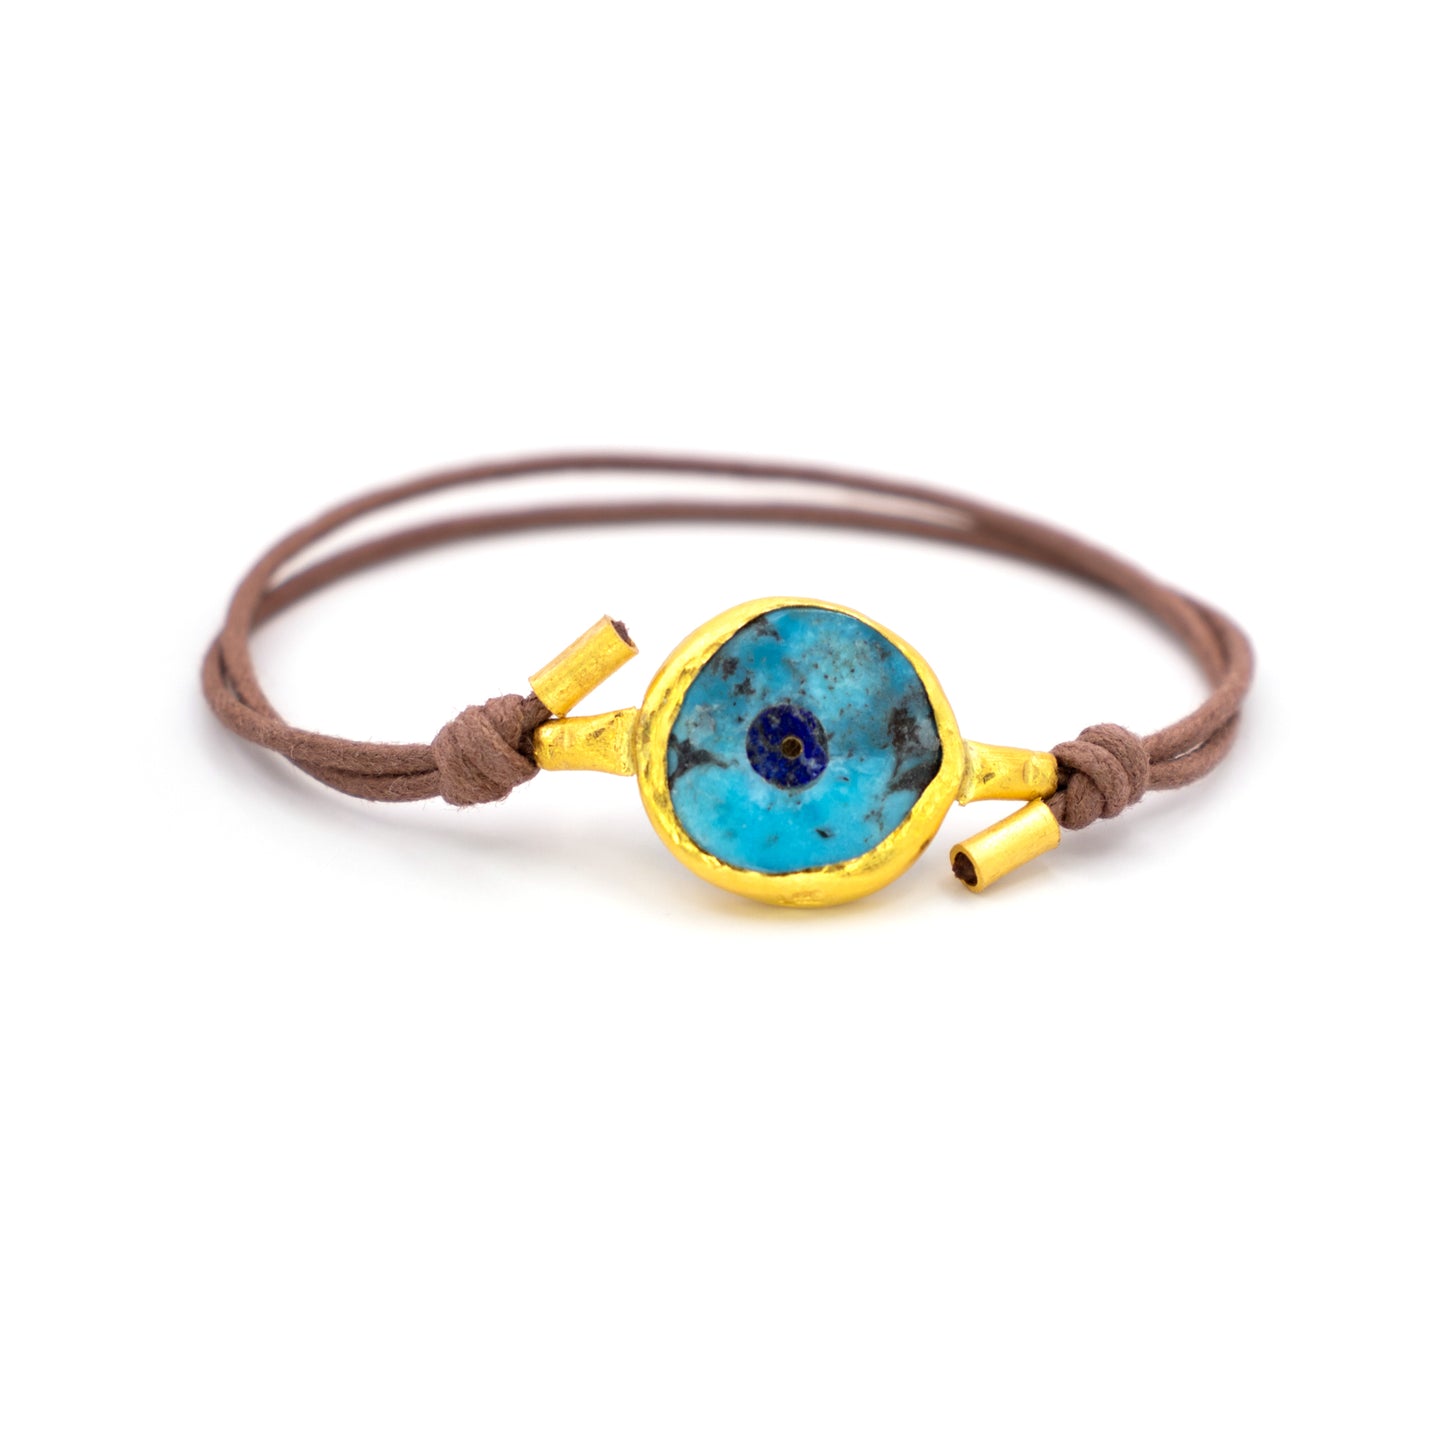 Turquoise and Lapis Charm Bracelet